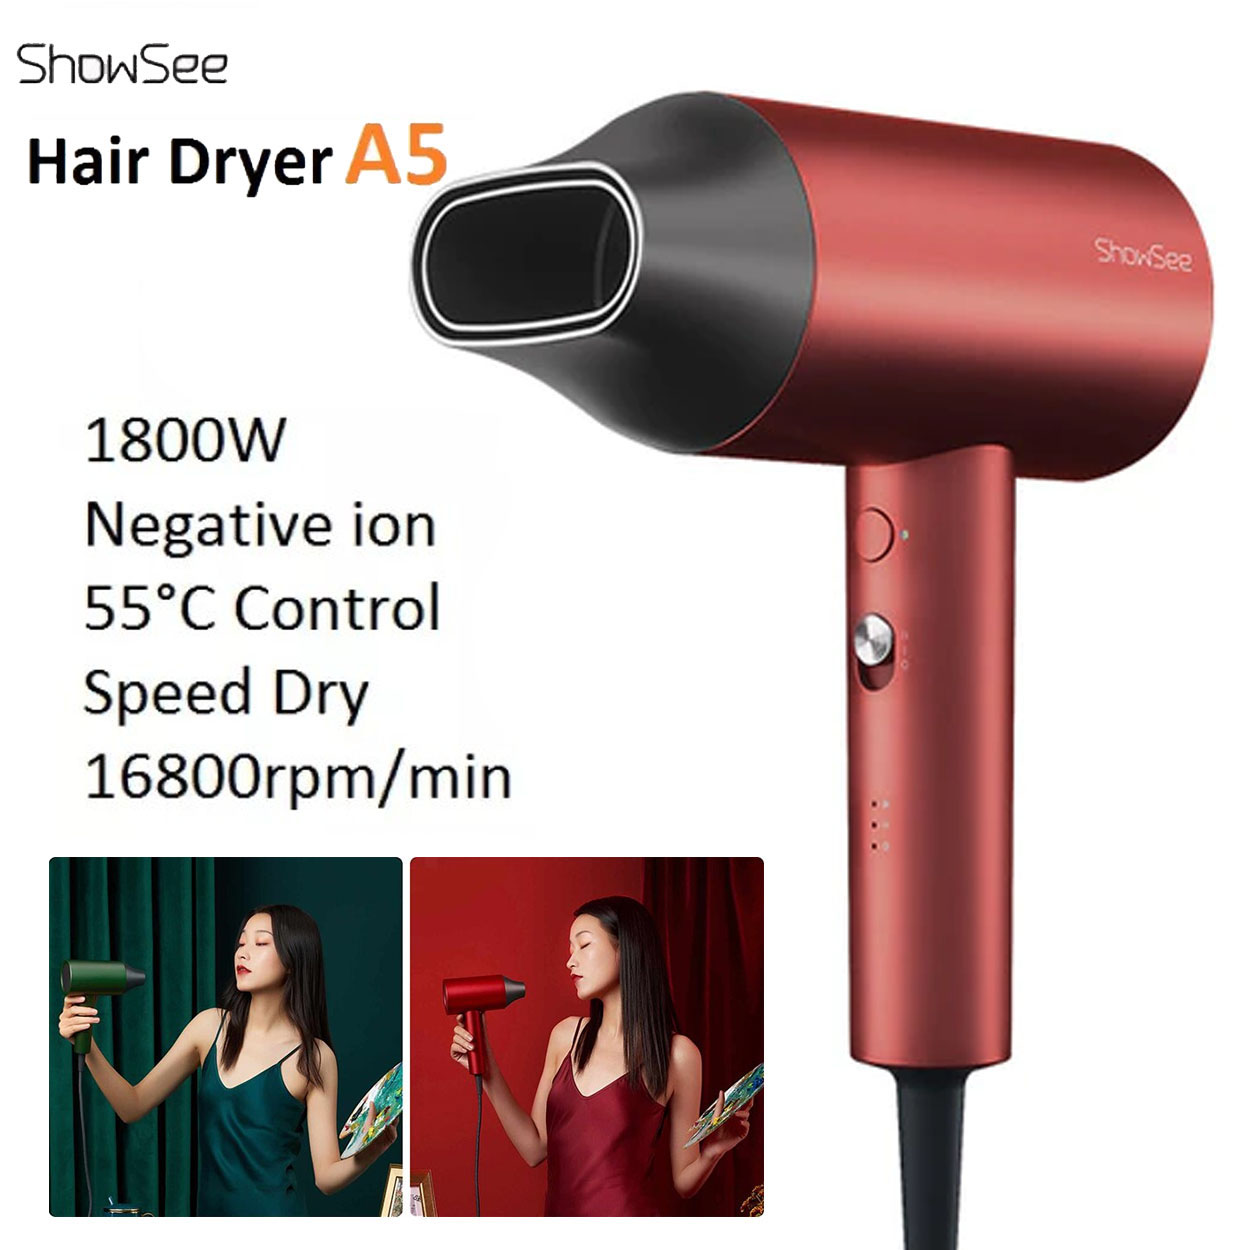 Buy Hair Dryer Rechargable online | Lazada.com.ph